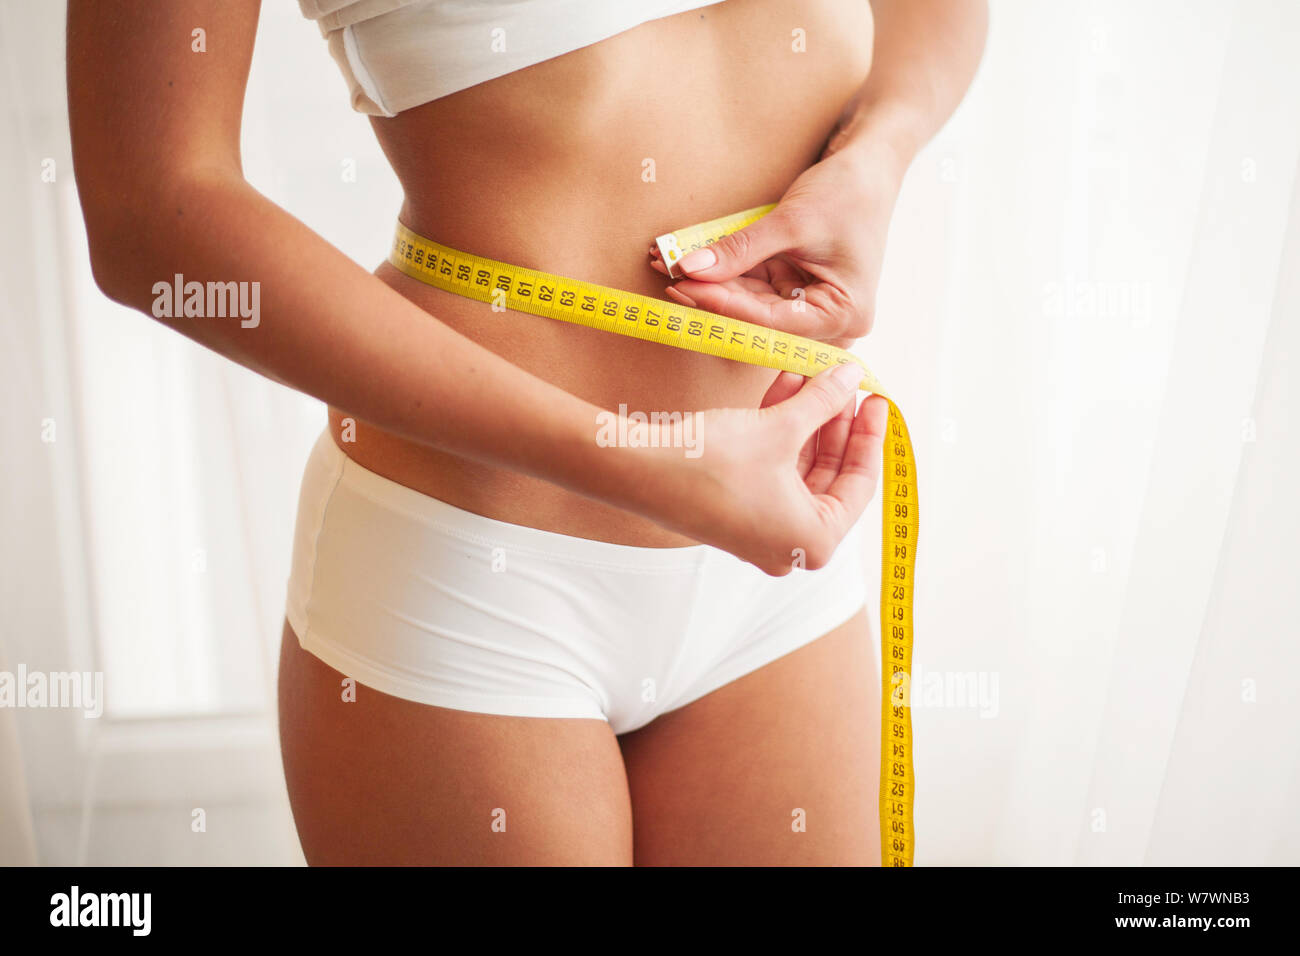 https://c8.alamy.com/comp/W7WNB3/slim-young-woman-measuring-her-thin-waist-with-a-tape-measure-W7WNB3.jpg